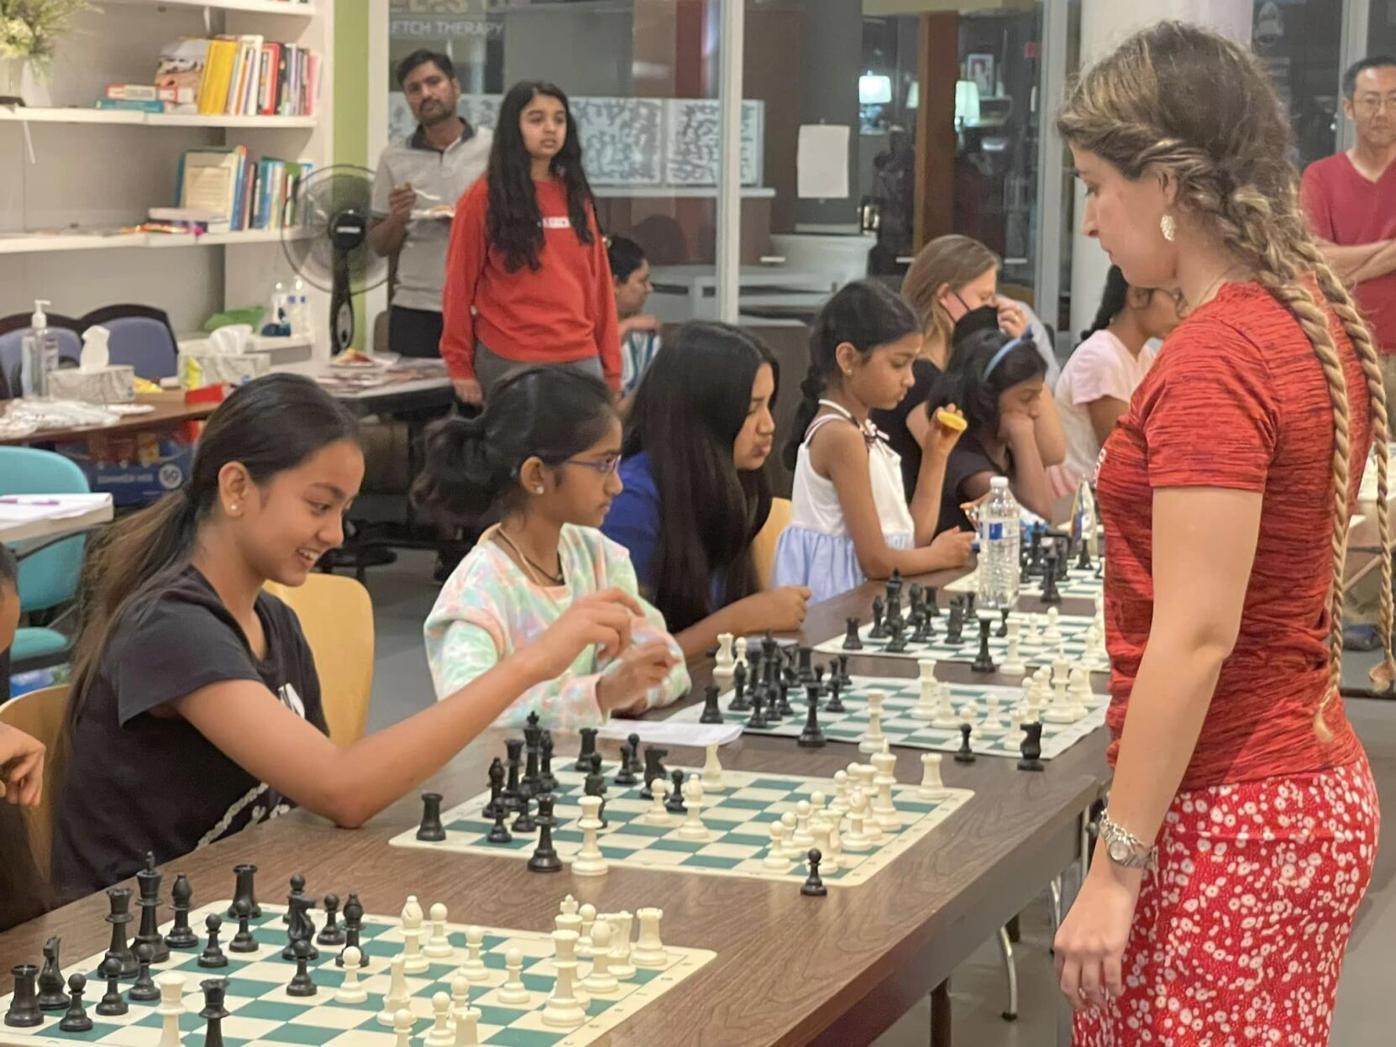 chess - Students, Britannica Kids